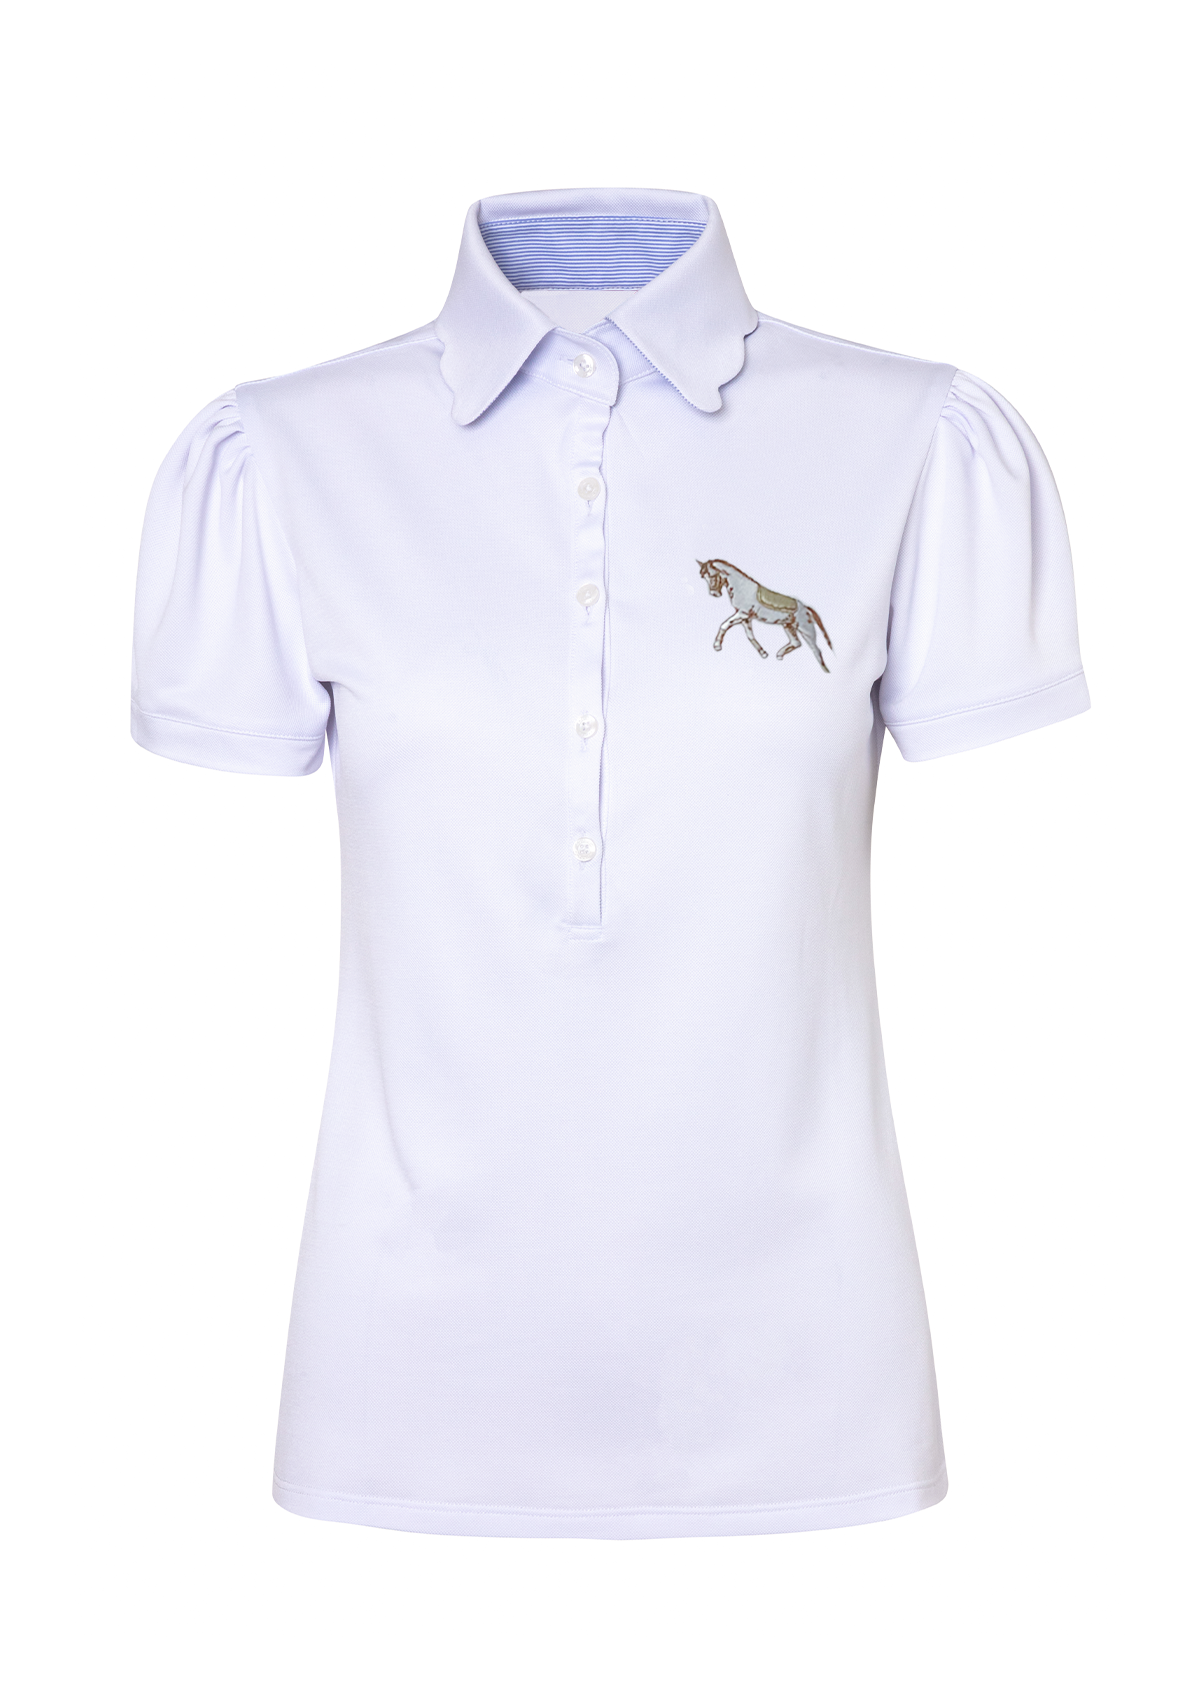 Acasia Horse Polo-Shirt | Basic White | High Tech - Rönner